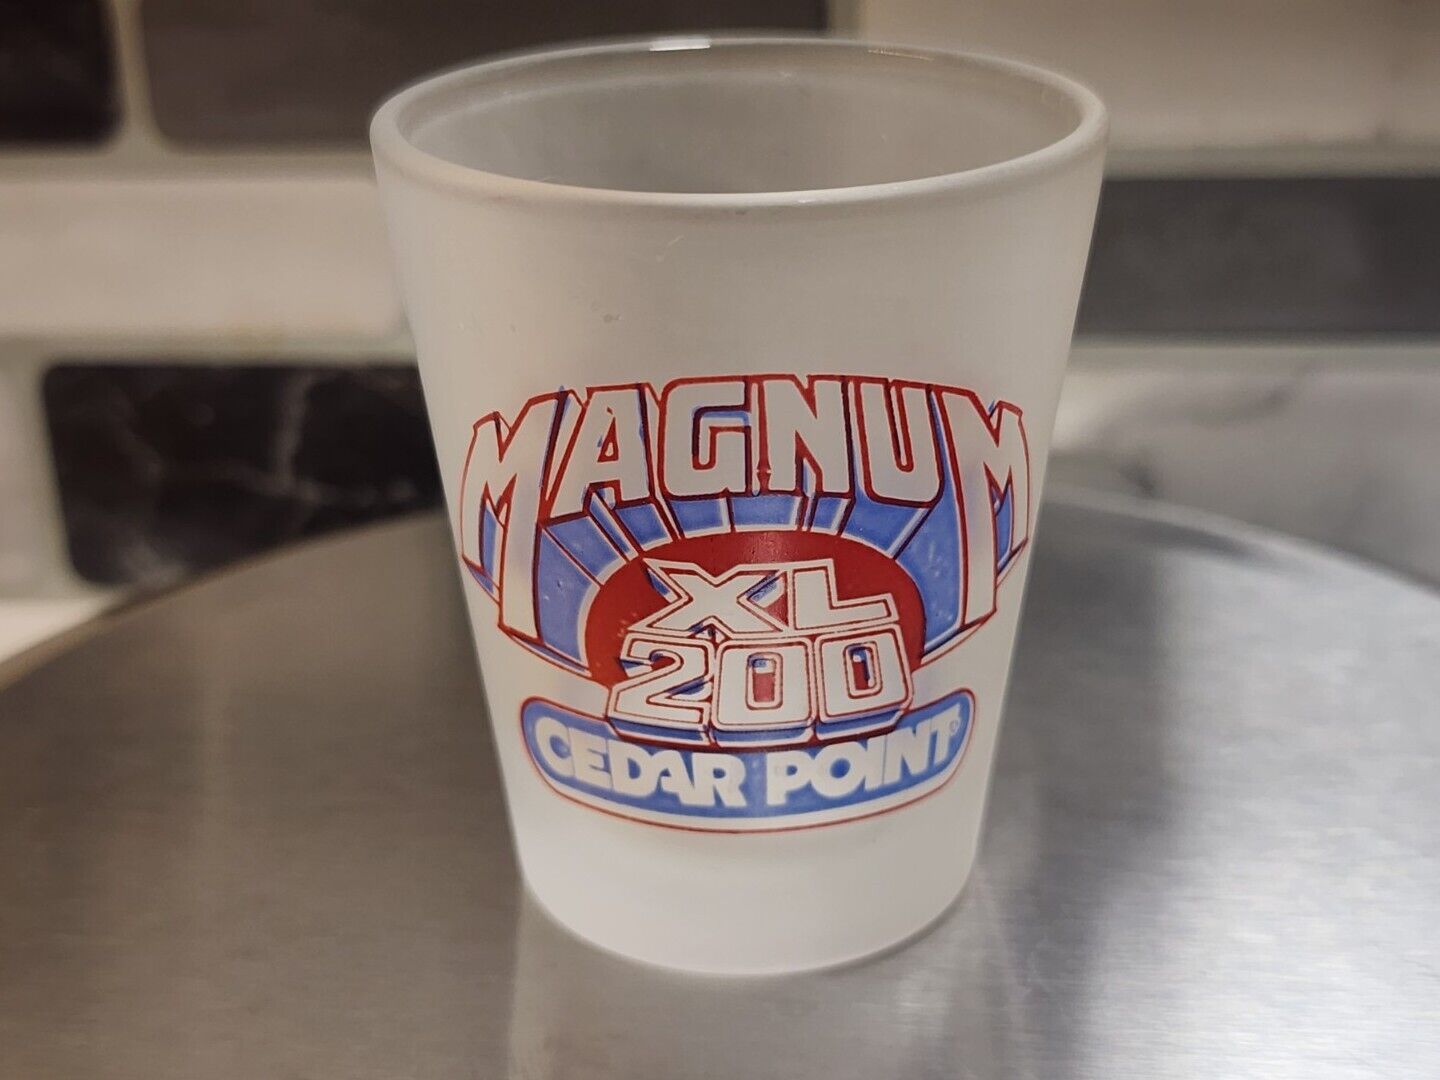 Vintage Cedar Point Shot Glass MAGNUM XL 200